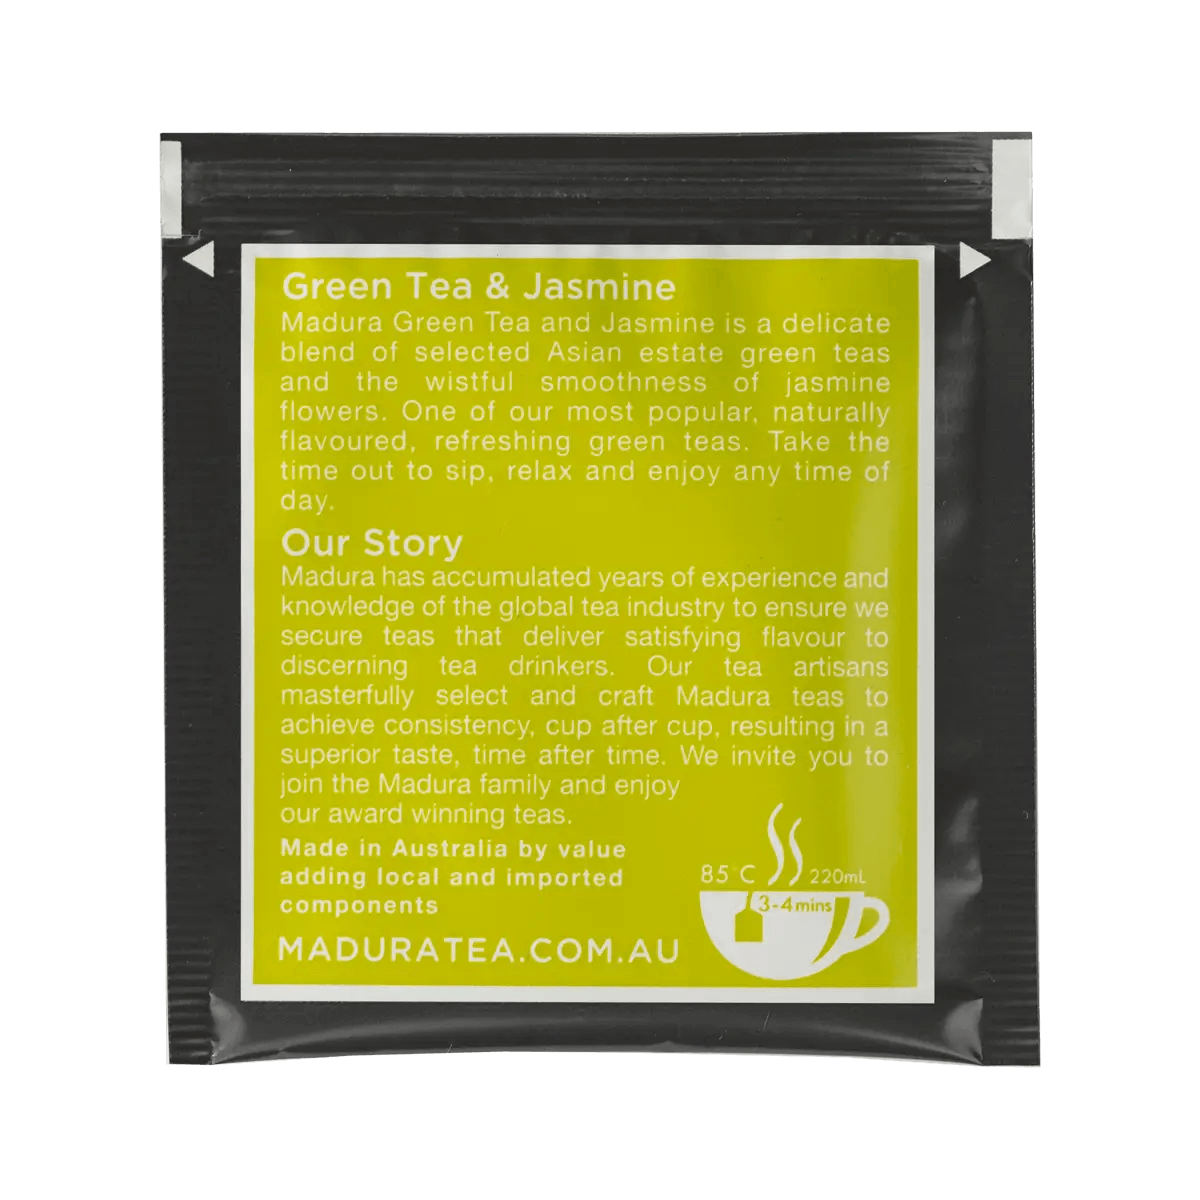 Green Tea & Jasmine 80 Enveloped Tea Bags - Madura Tea Estates